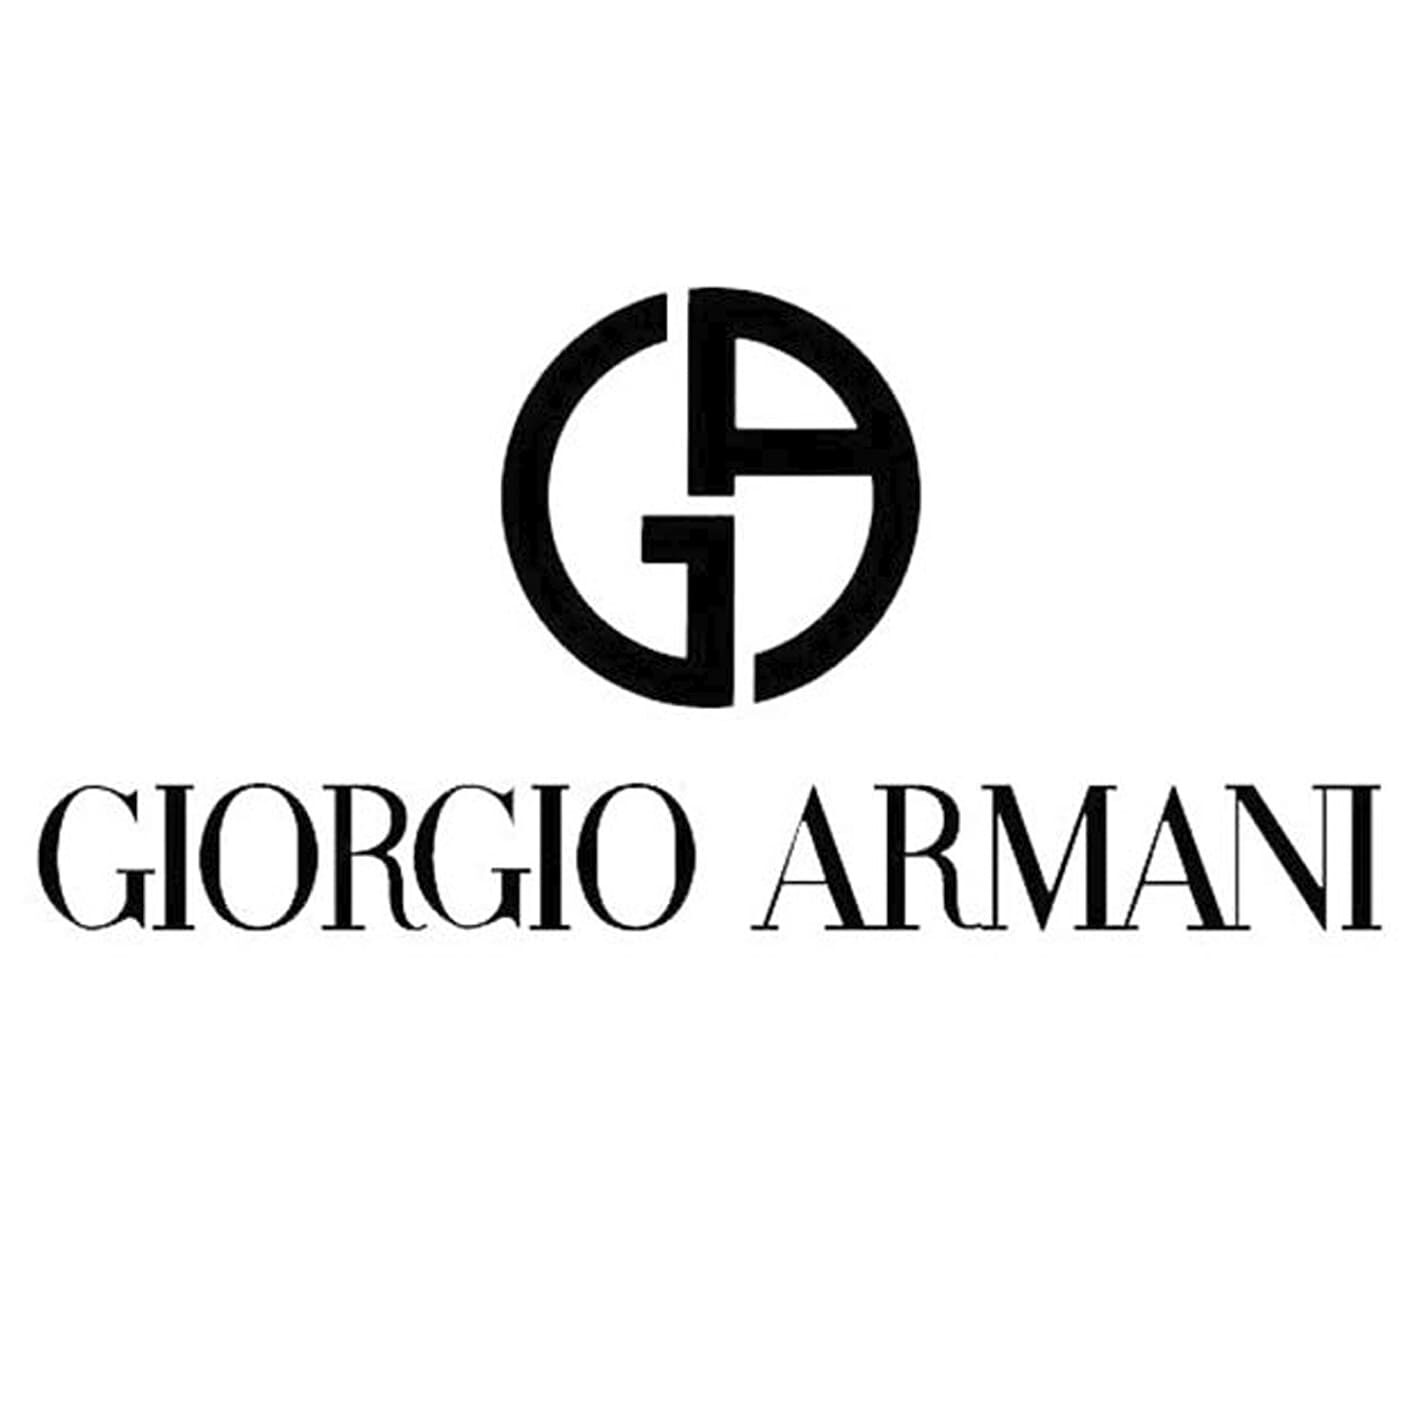 Giorgio-Armani-logo.jpg